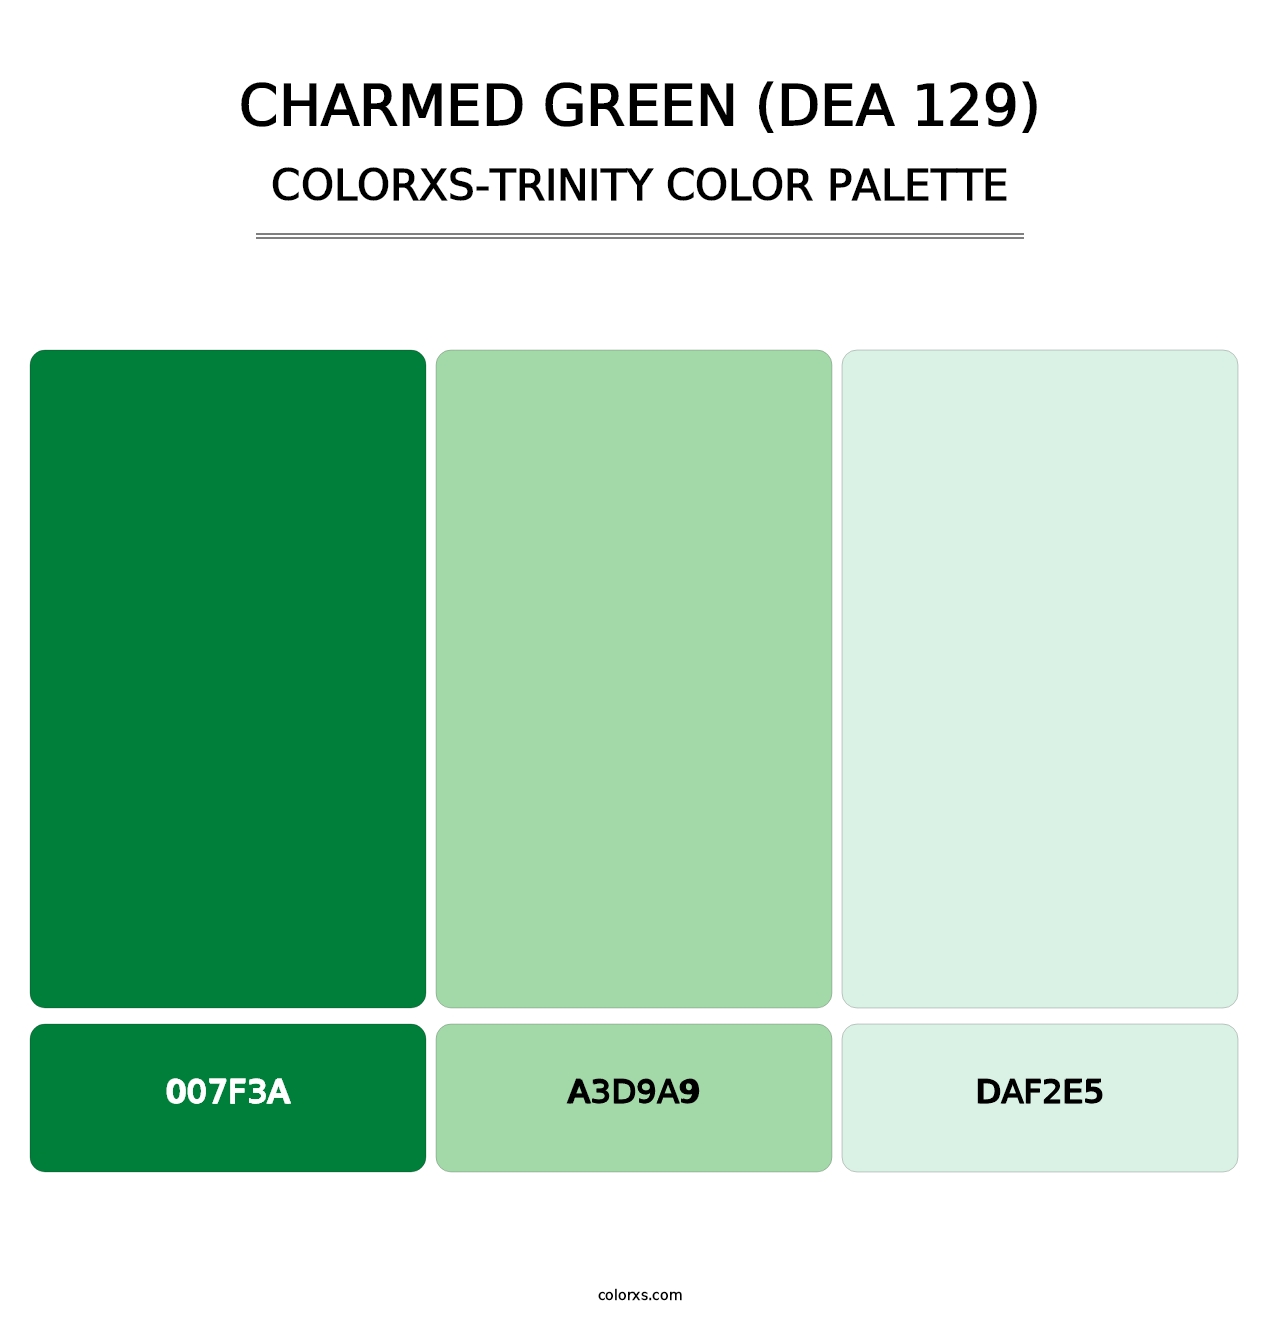 Charmed Green (DEA 129) - Colorxs Trinity Palette